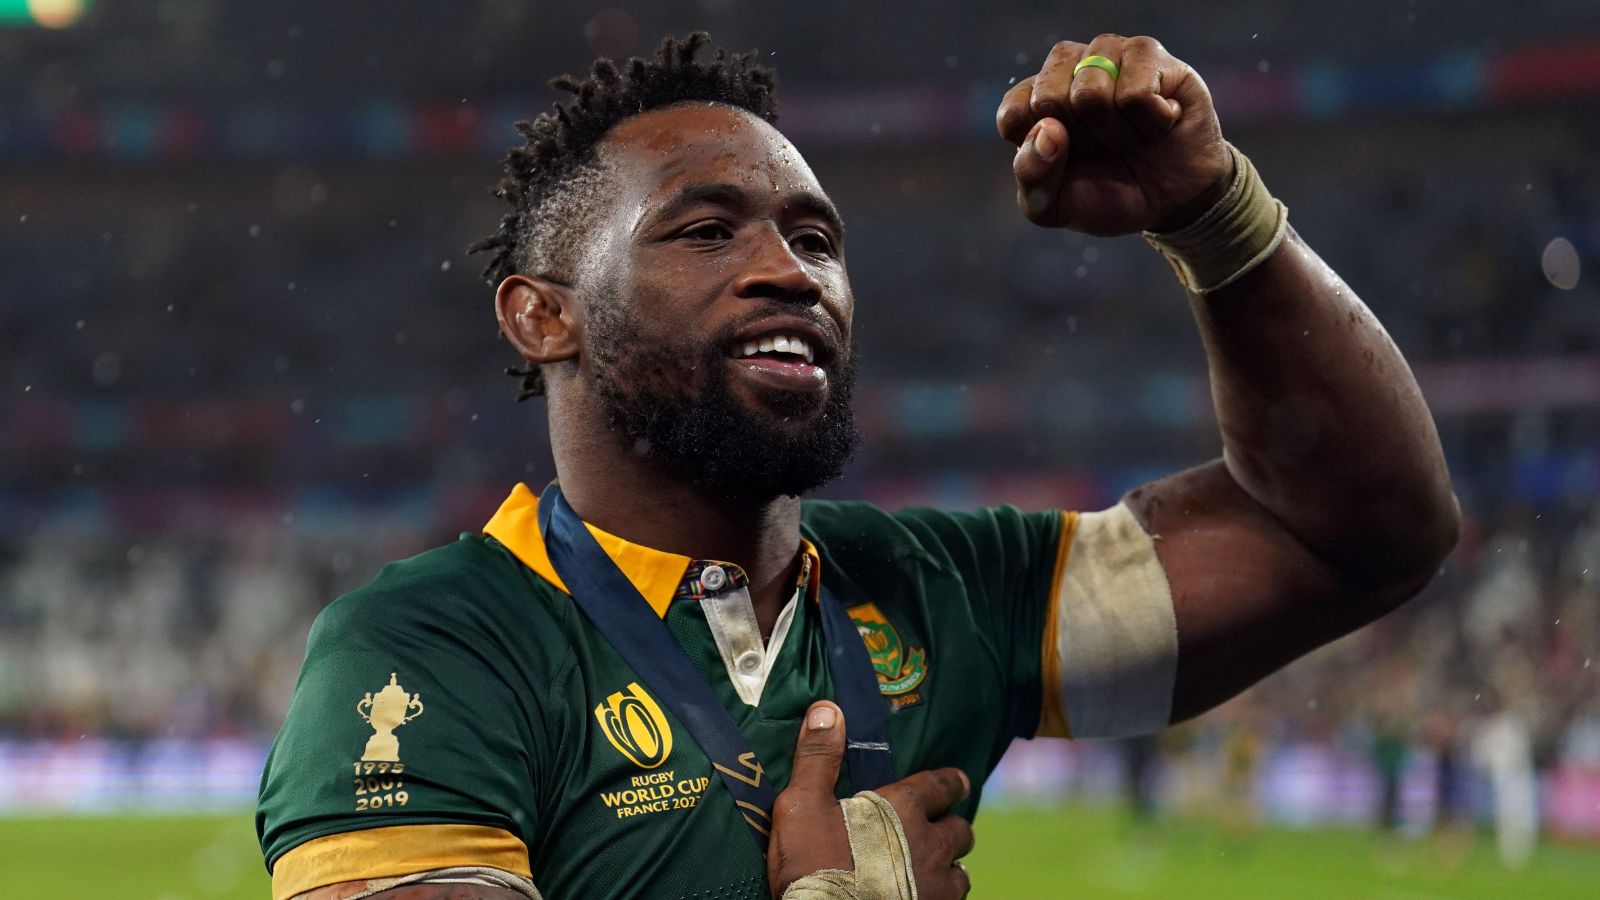 springboks captain siya kolisi explains why ‘everybody buys into’ rassie erasmus’ plans